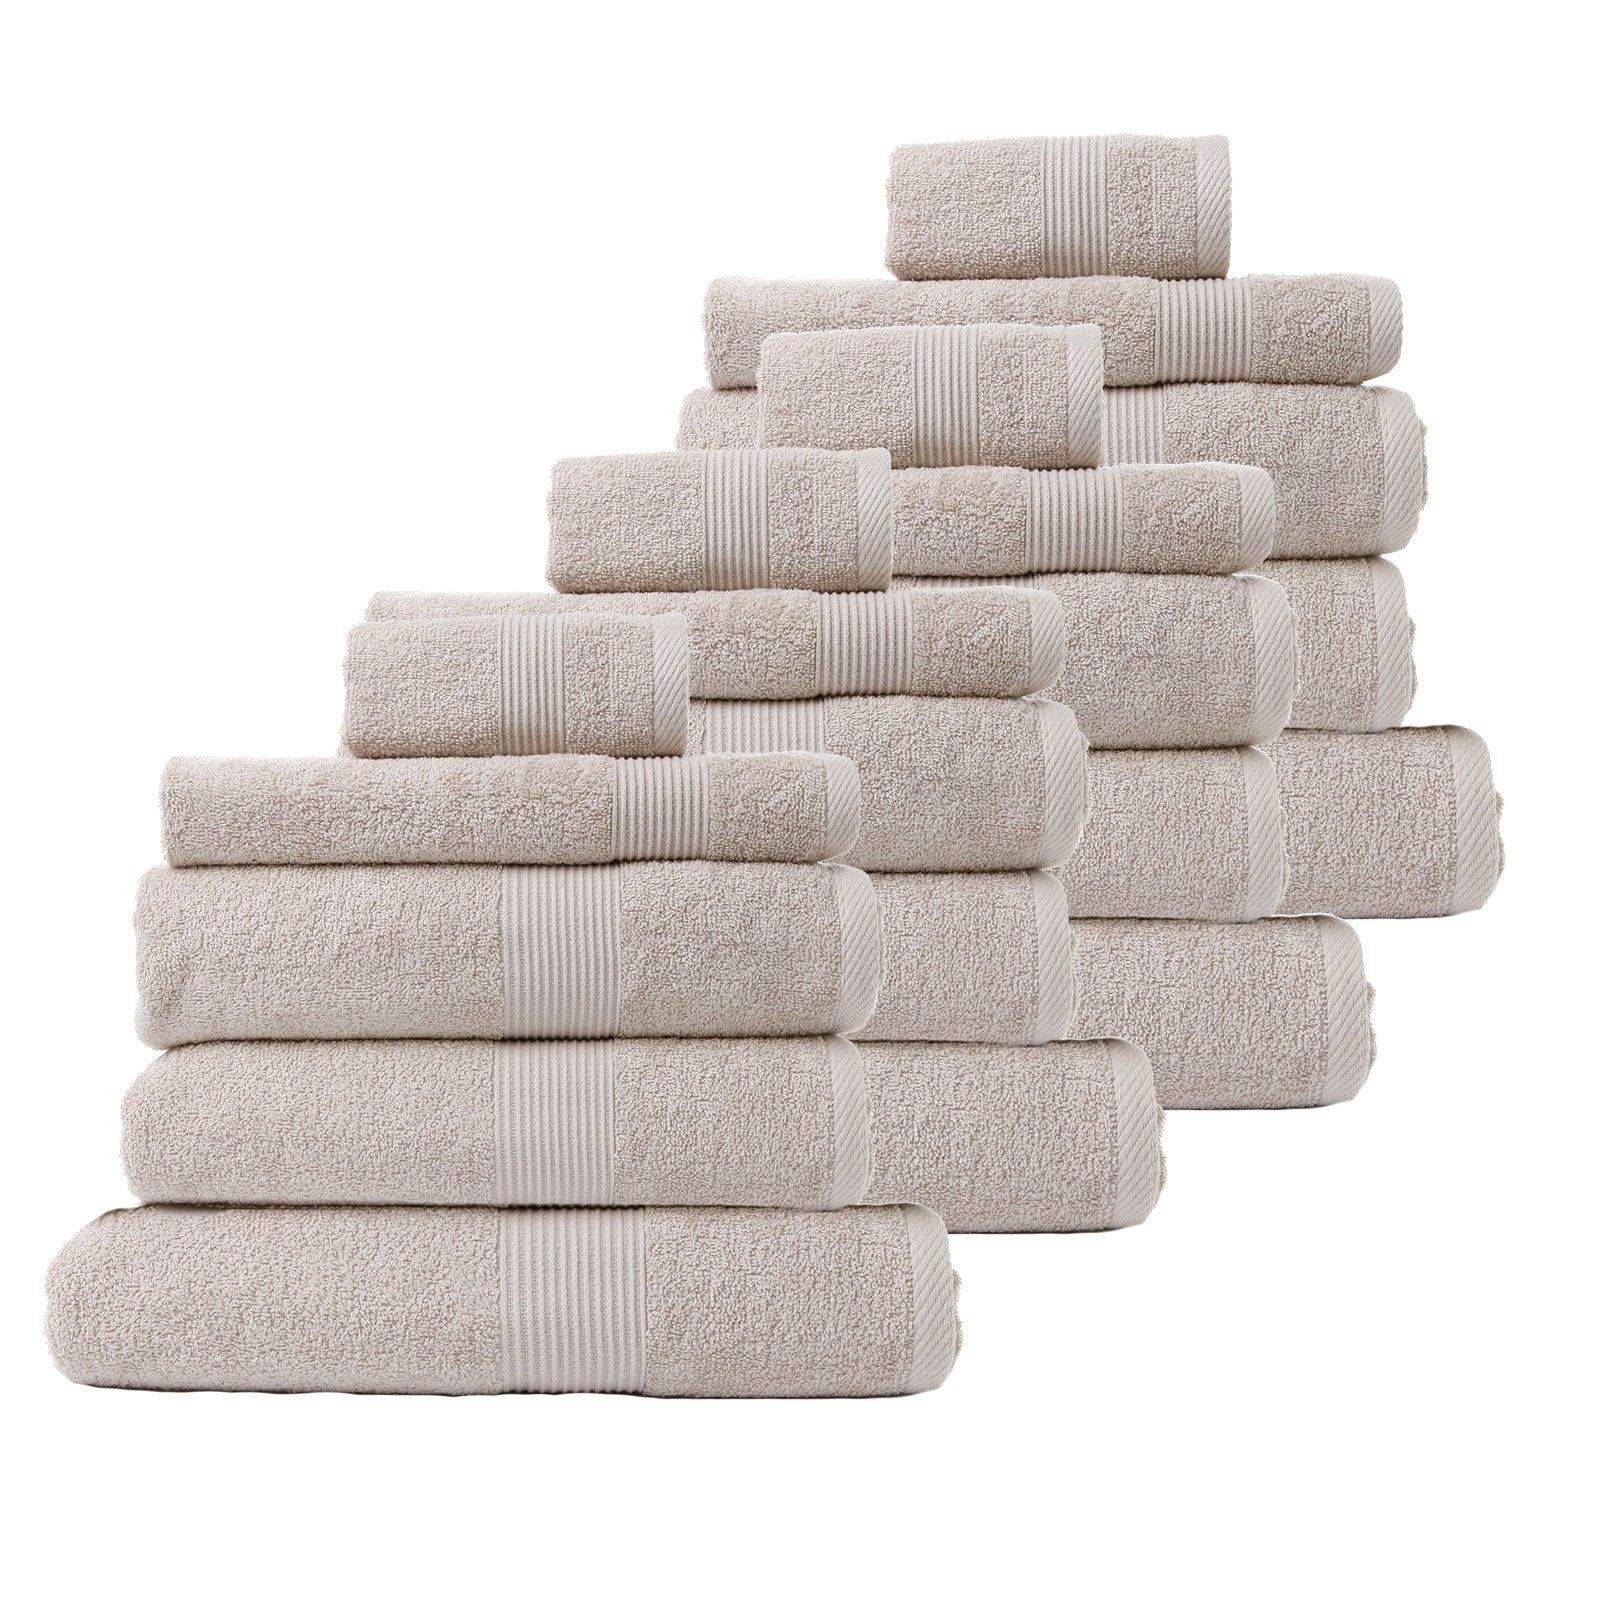 royal-comfort-20-piece-cotton-bamboo-towel-bundle-set-450gsm-luxurious-absorbent-beige